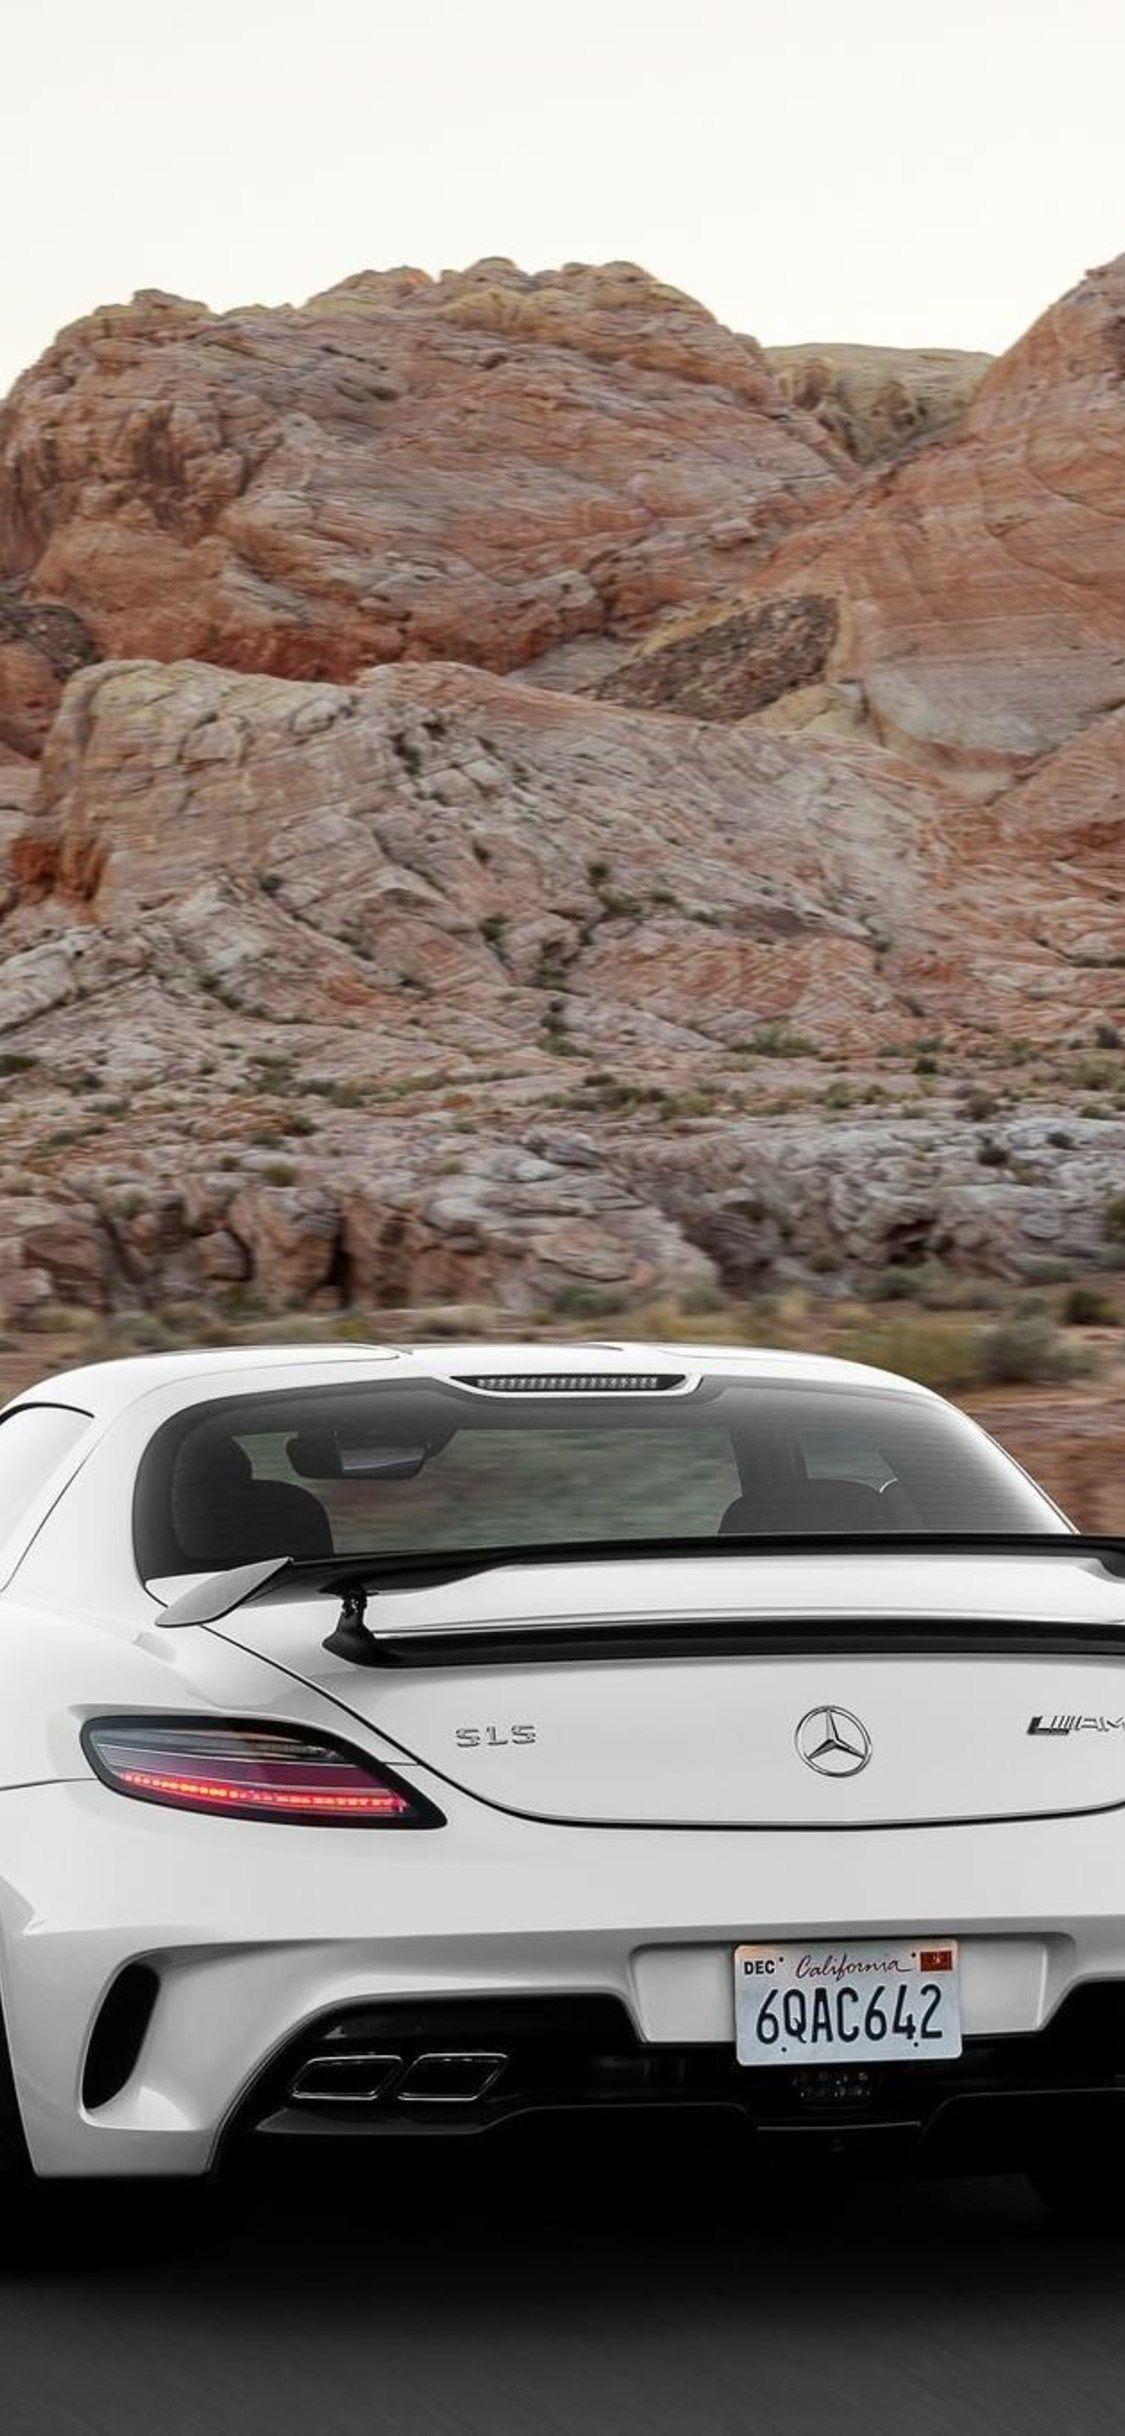 Mercedes Benz IPhone Wallpaper .wallpaperaccess.com